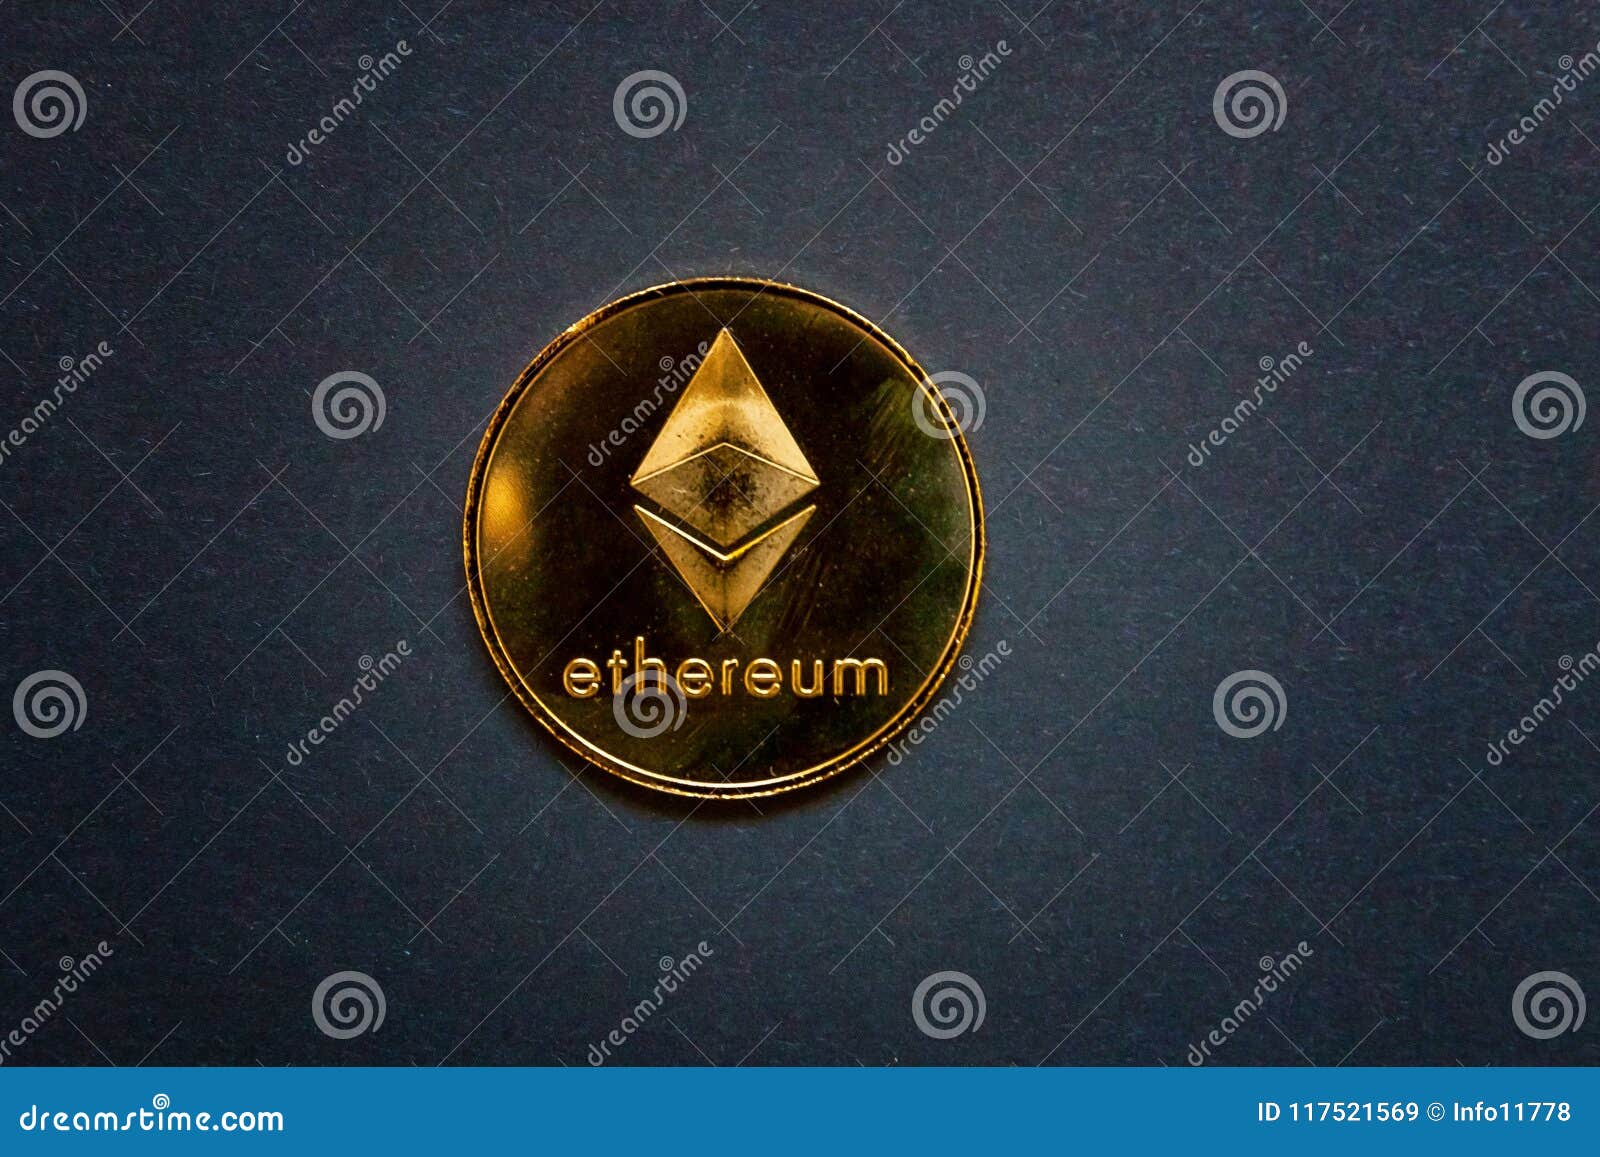 Ethereum, ETH, Crypto Coin On Black Background Stock Image ...